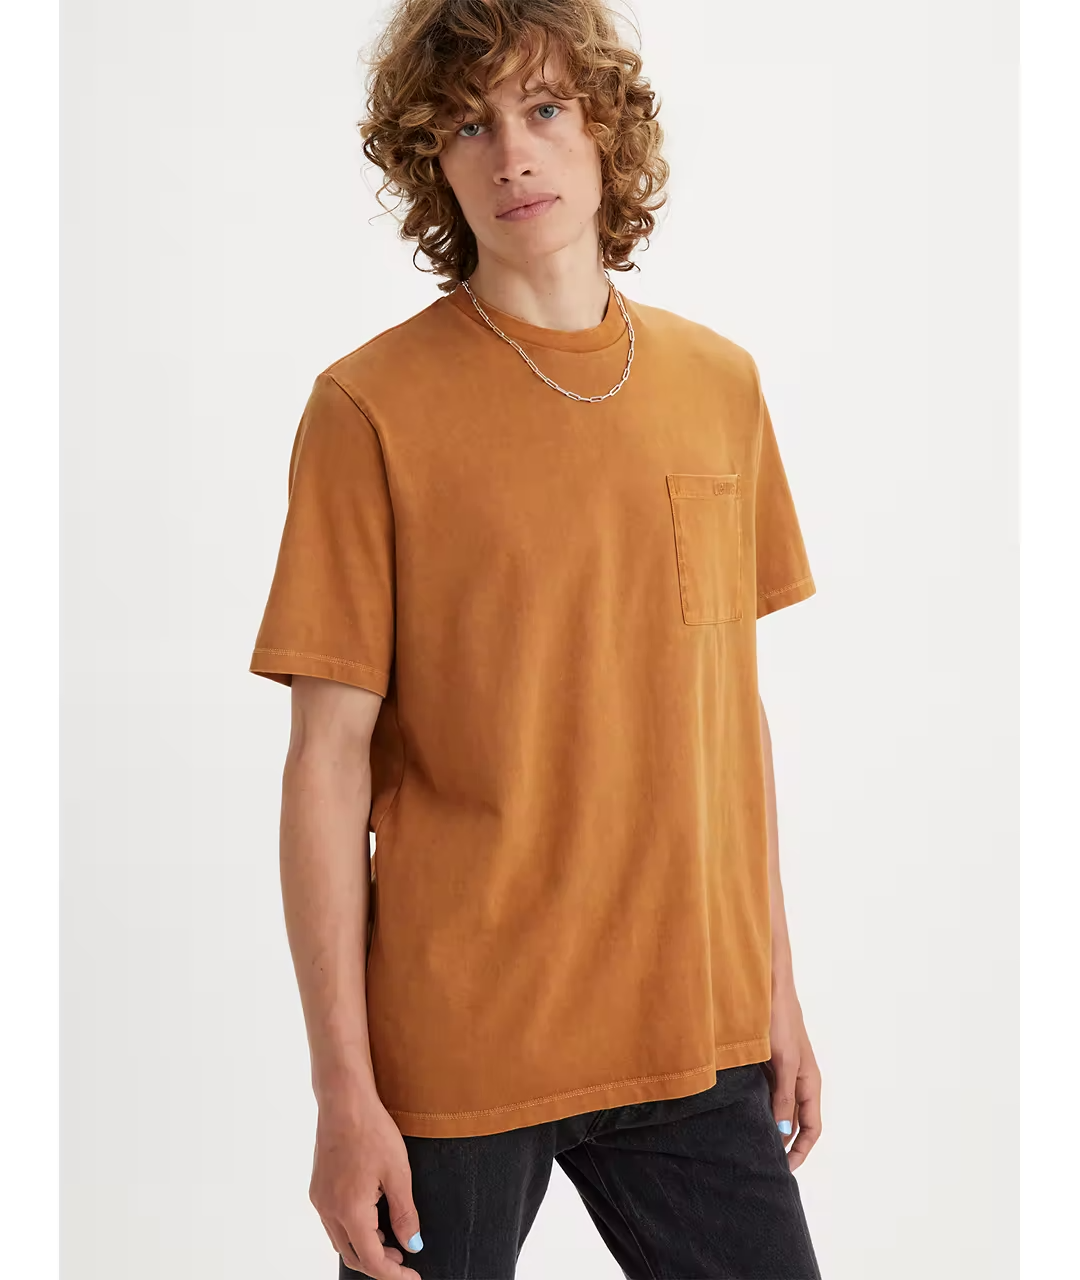 Levi's - Easy Pocket T-Shirt